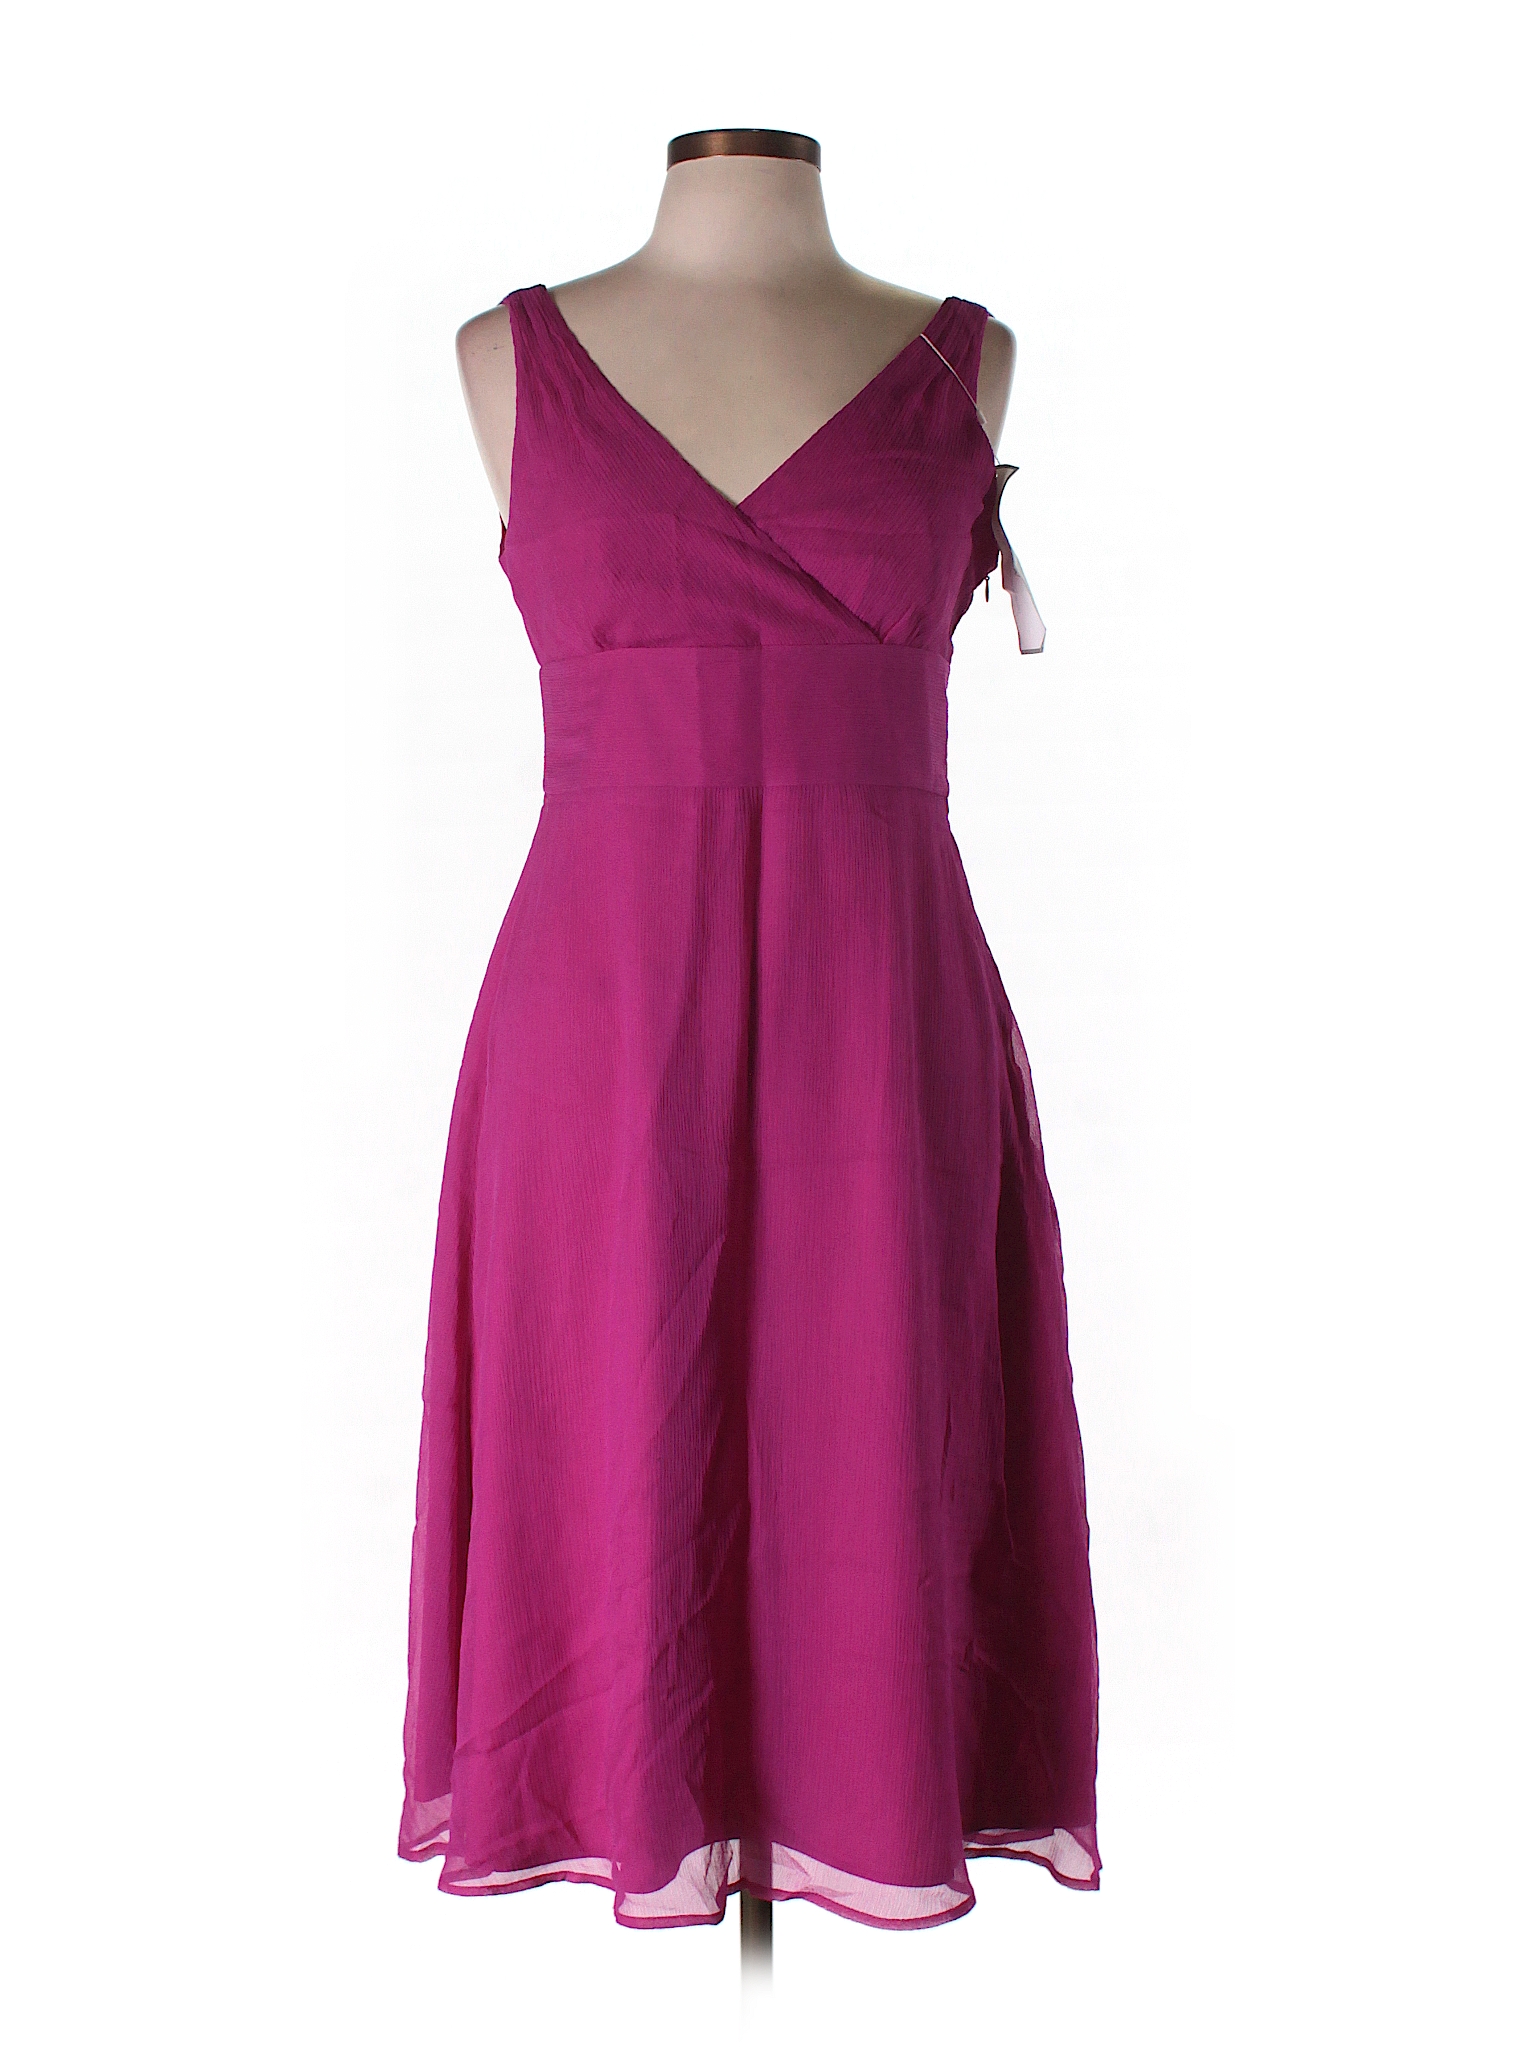 J. Crew 100% Silk Solid Purple Silk Dress Size 10 - 77% off | thredUP